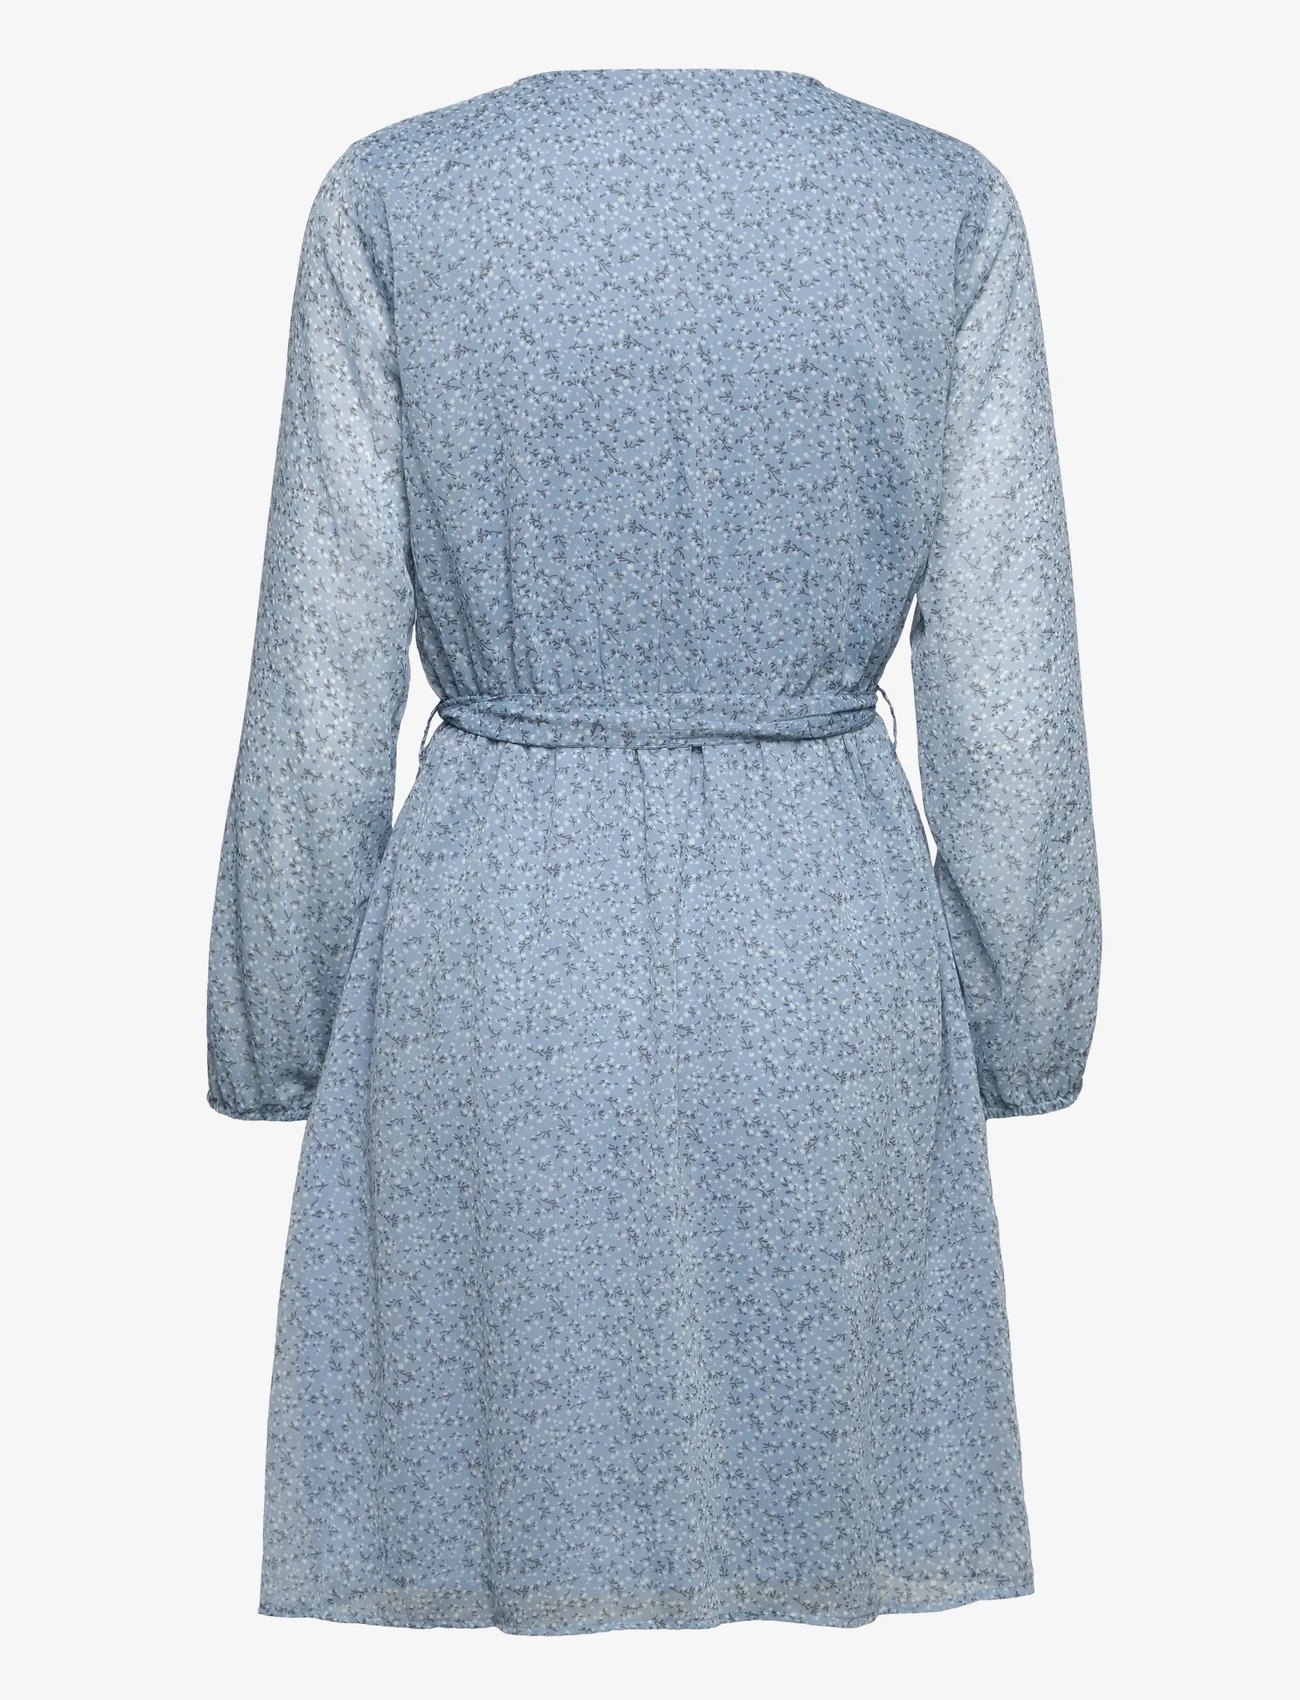 ONLY - ONLCERA 3/4 SHORT DRESS WVN - short dresses - dusty blue - 1